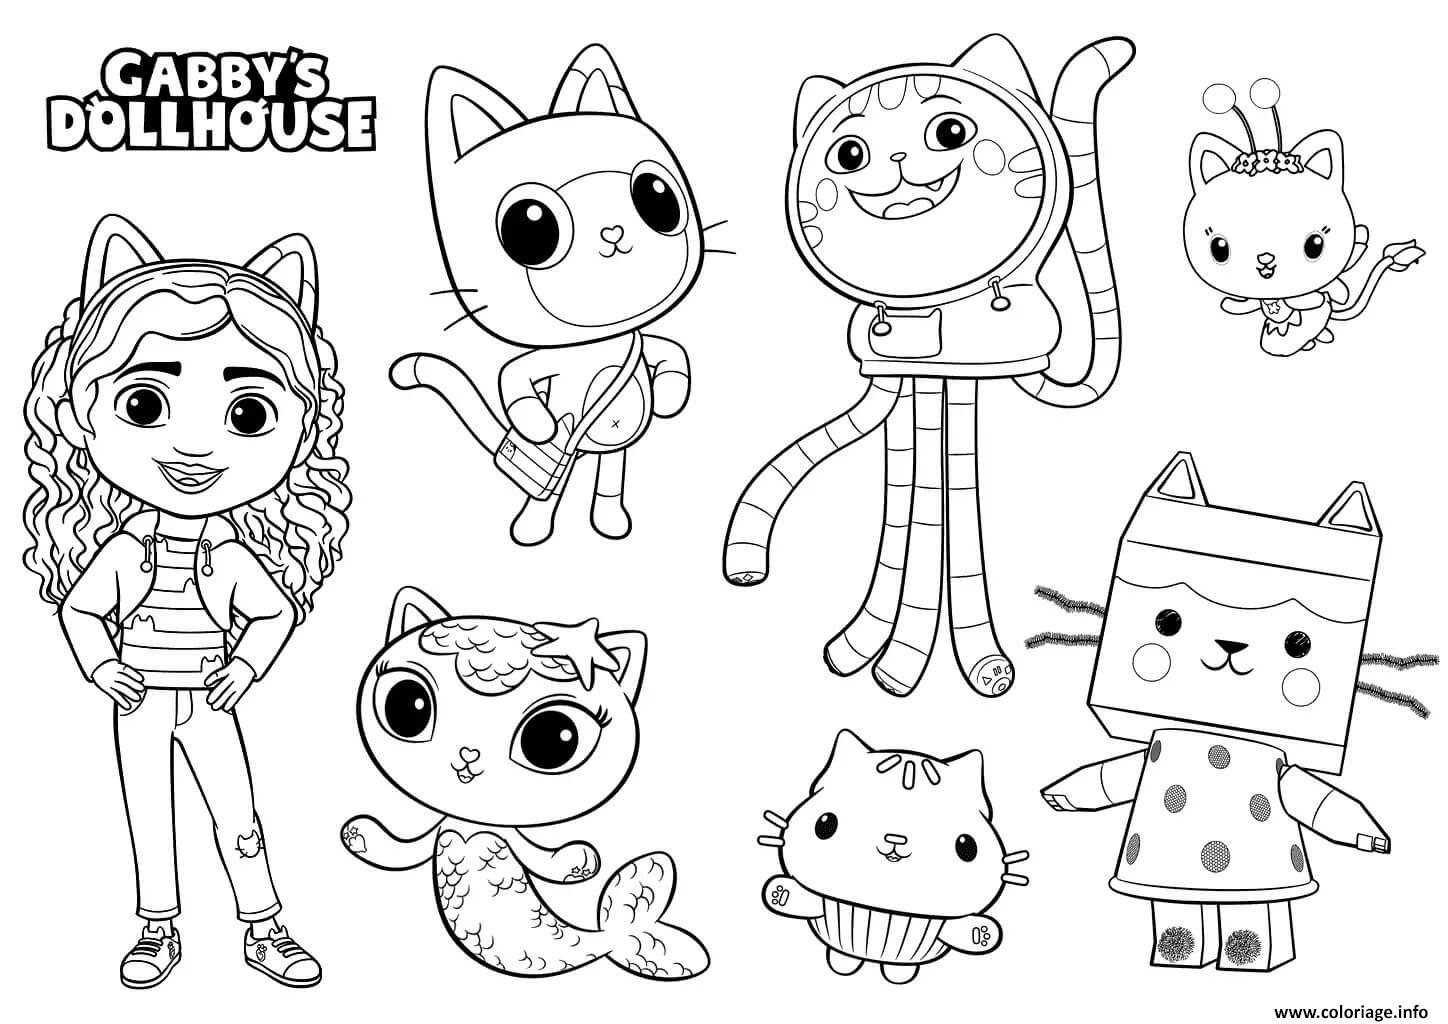 Coloriage Gabbys Dollhouse Gabby Chat Serie Animee Pour Enfants 